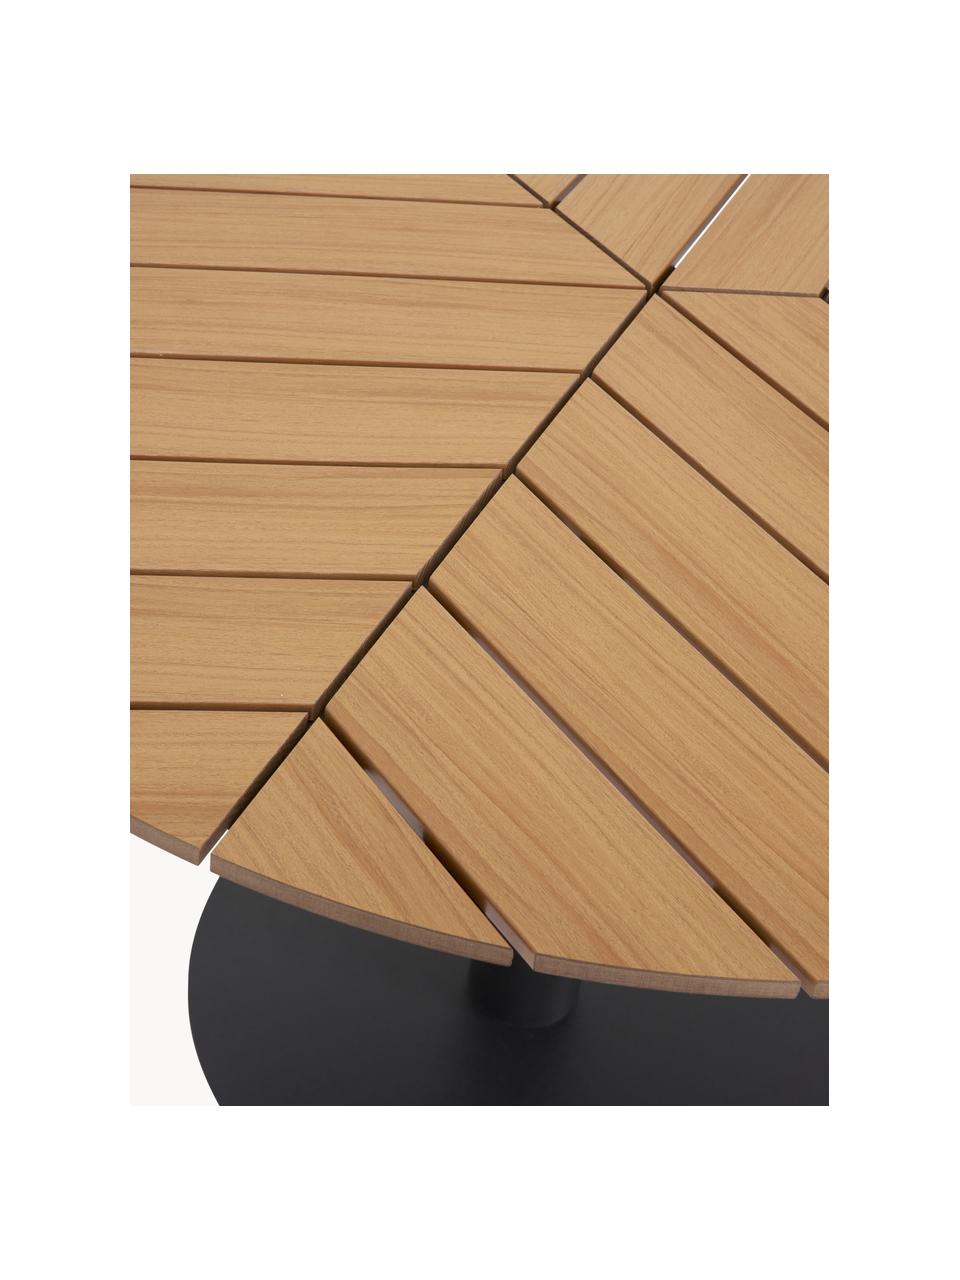 Gartentisch Troy, Tischplatte: Kunststoff, Beige, Holz-Optik, Schwarz, Ø 110 x H 74 cm